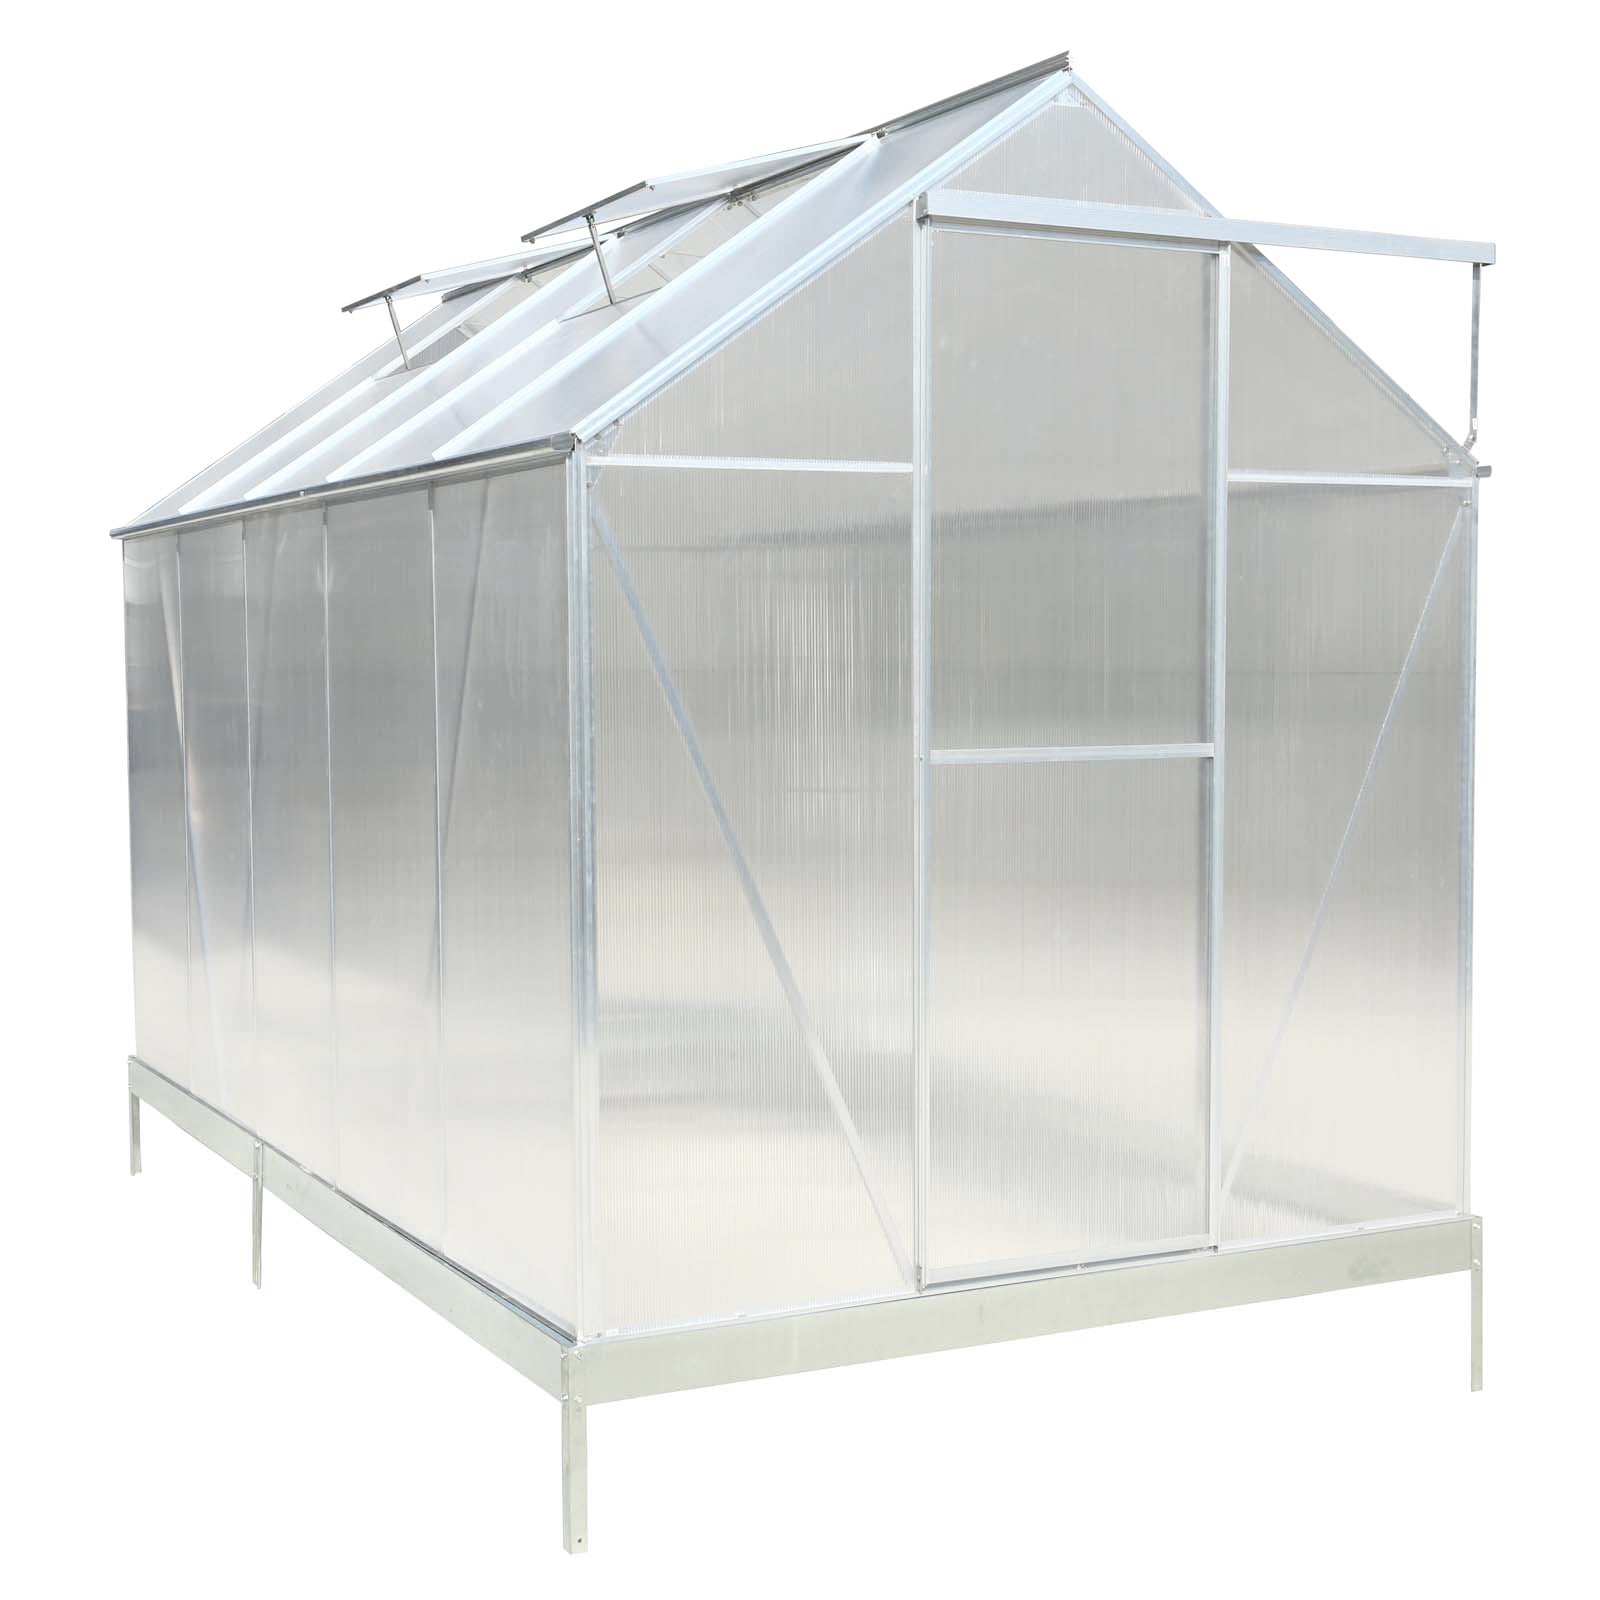 6.3'*10.2'*7' Polycarbonate Greenhouse, Heavy Duty silver-aluminium